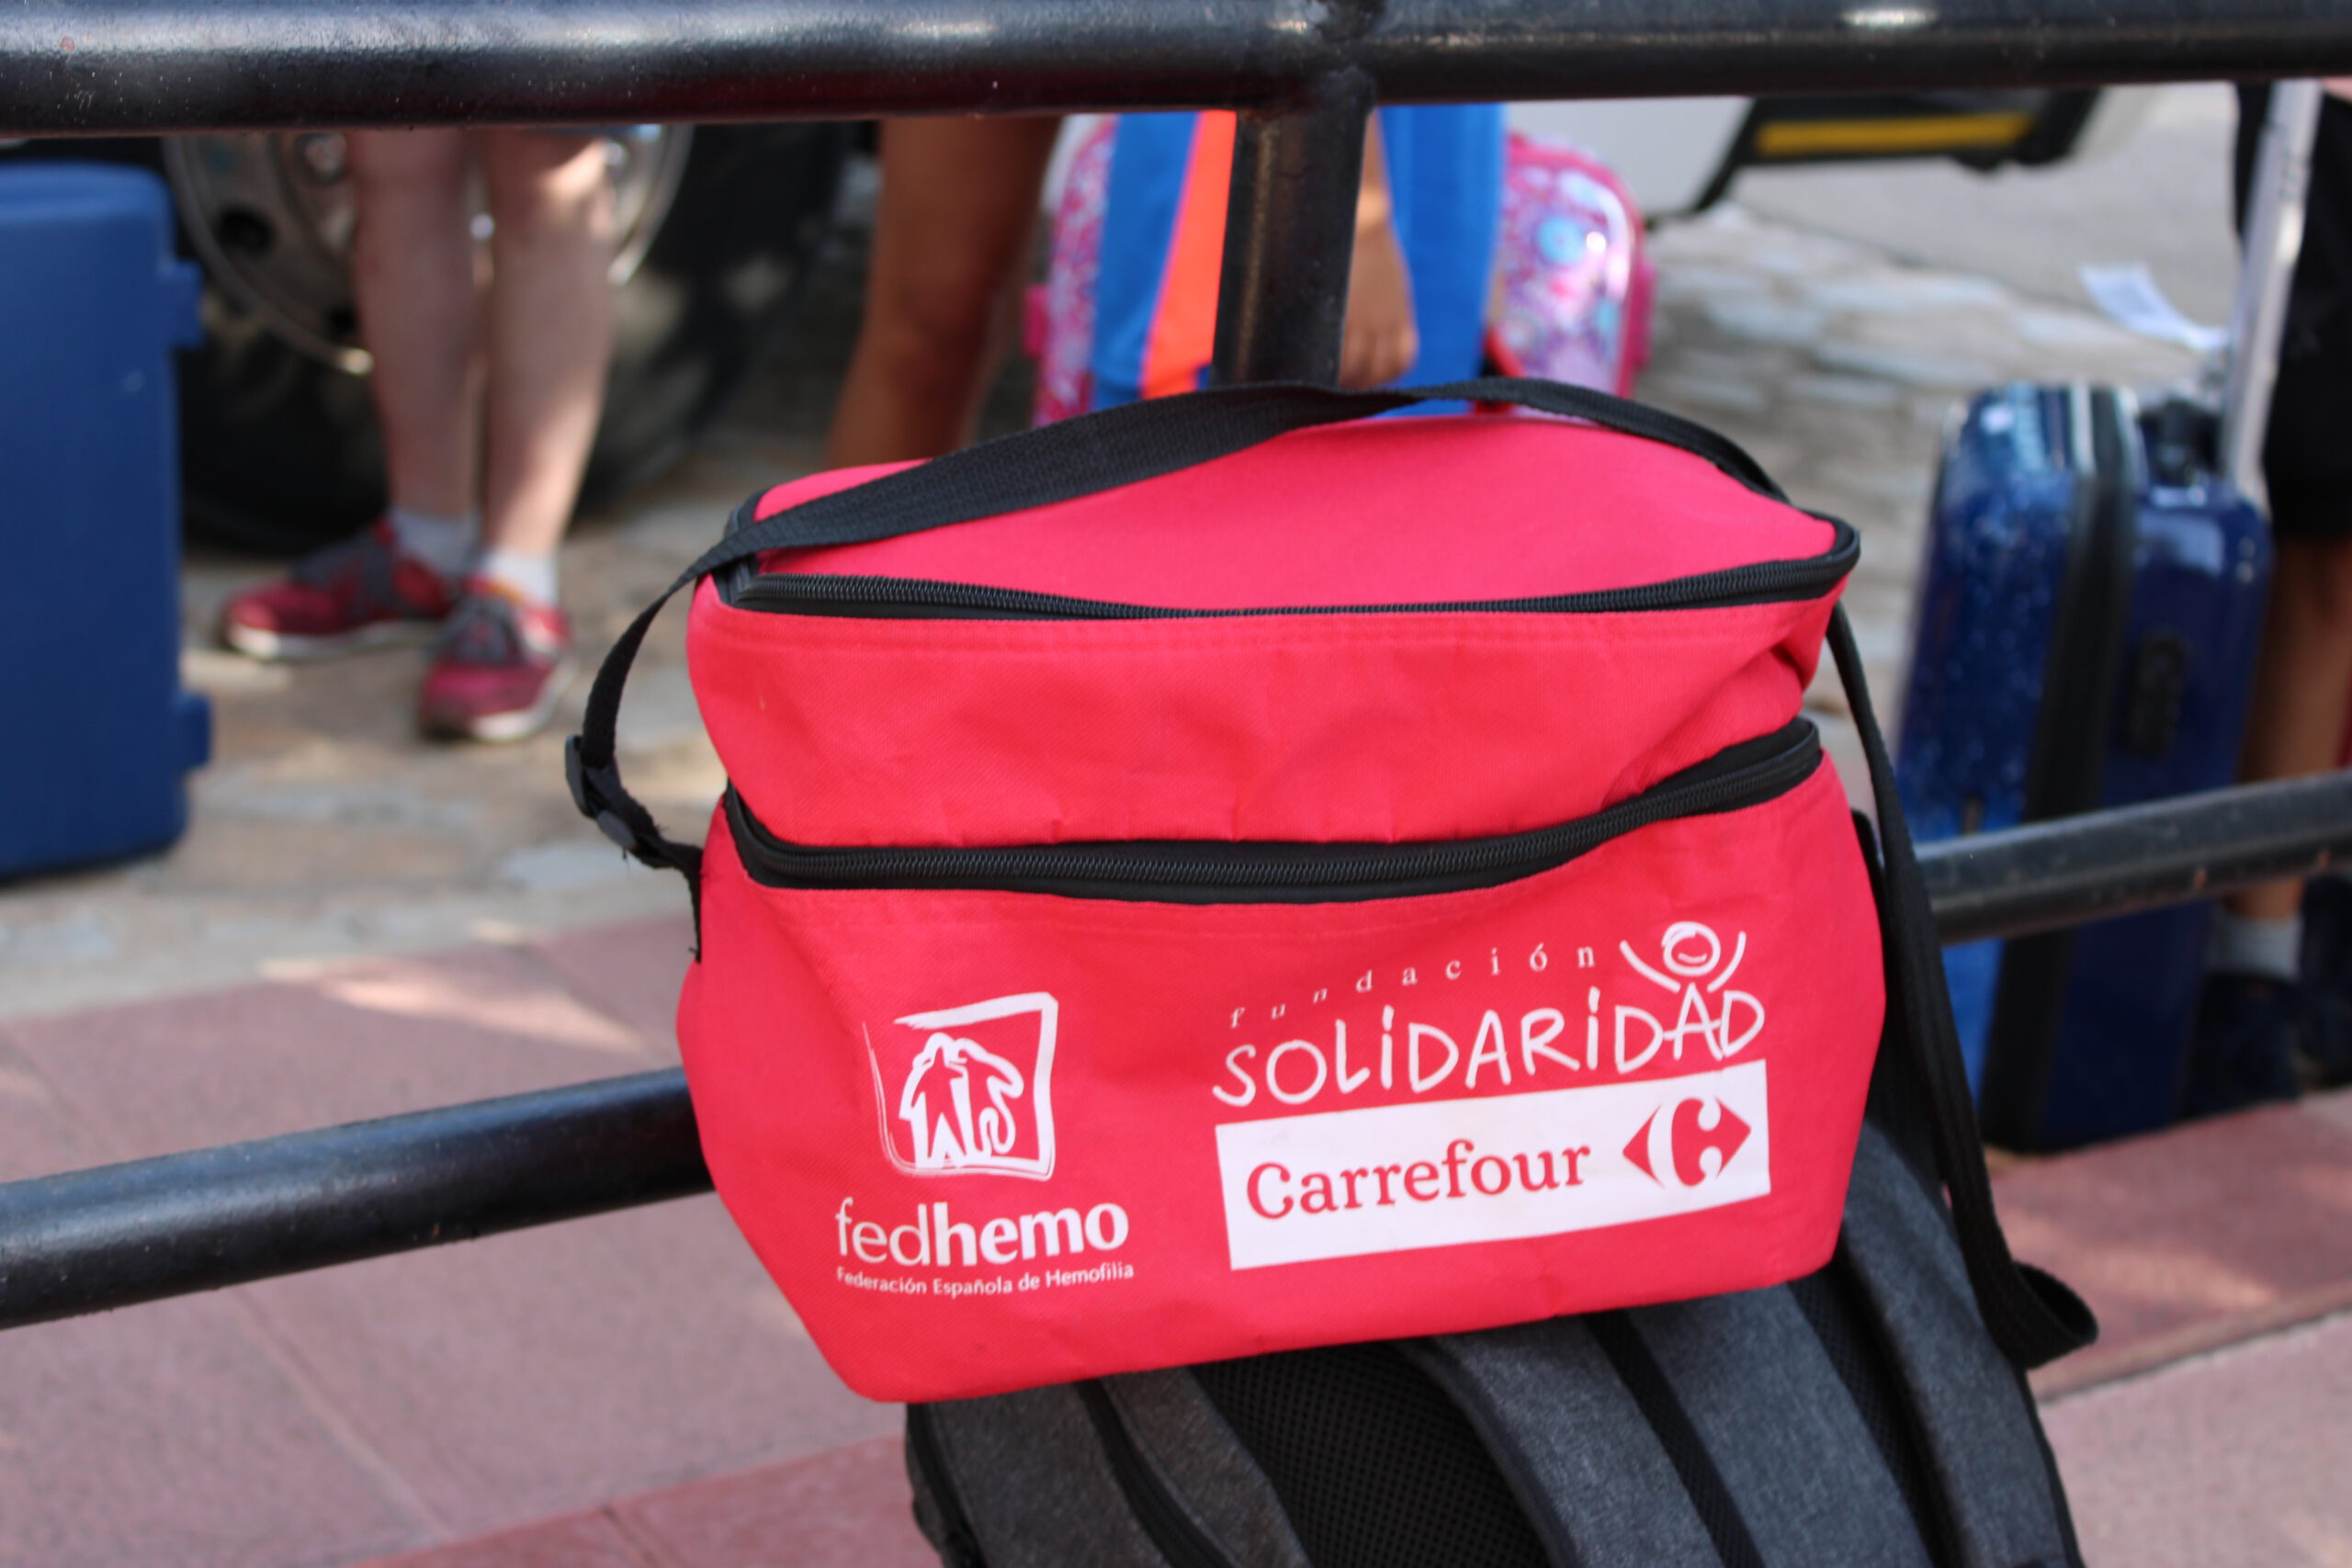 Fundación Solidaridad Carrefour dona 30.000 euros a Fedhemo en beneficio de 1.000 menores con hemofilia y otras coagulopatías congénitas de toda España